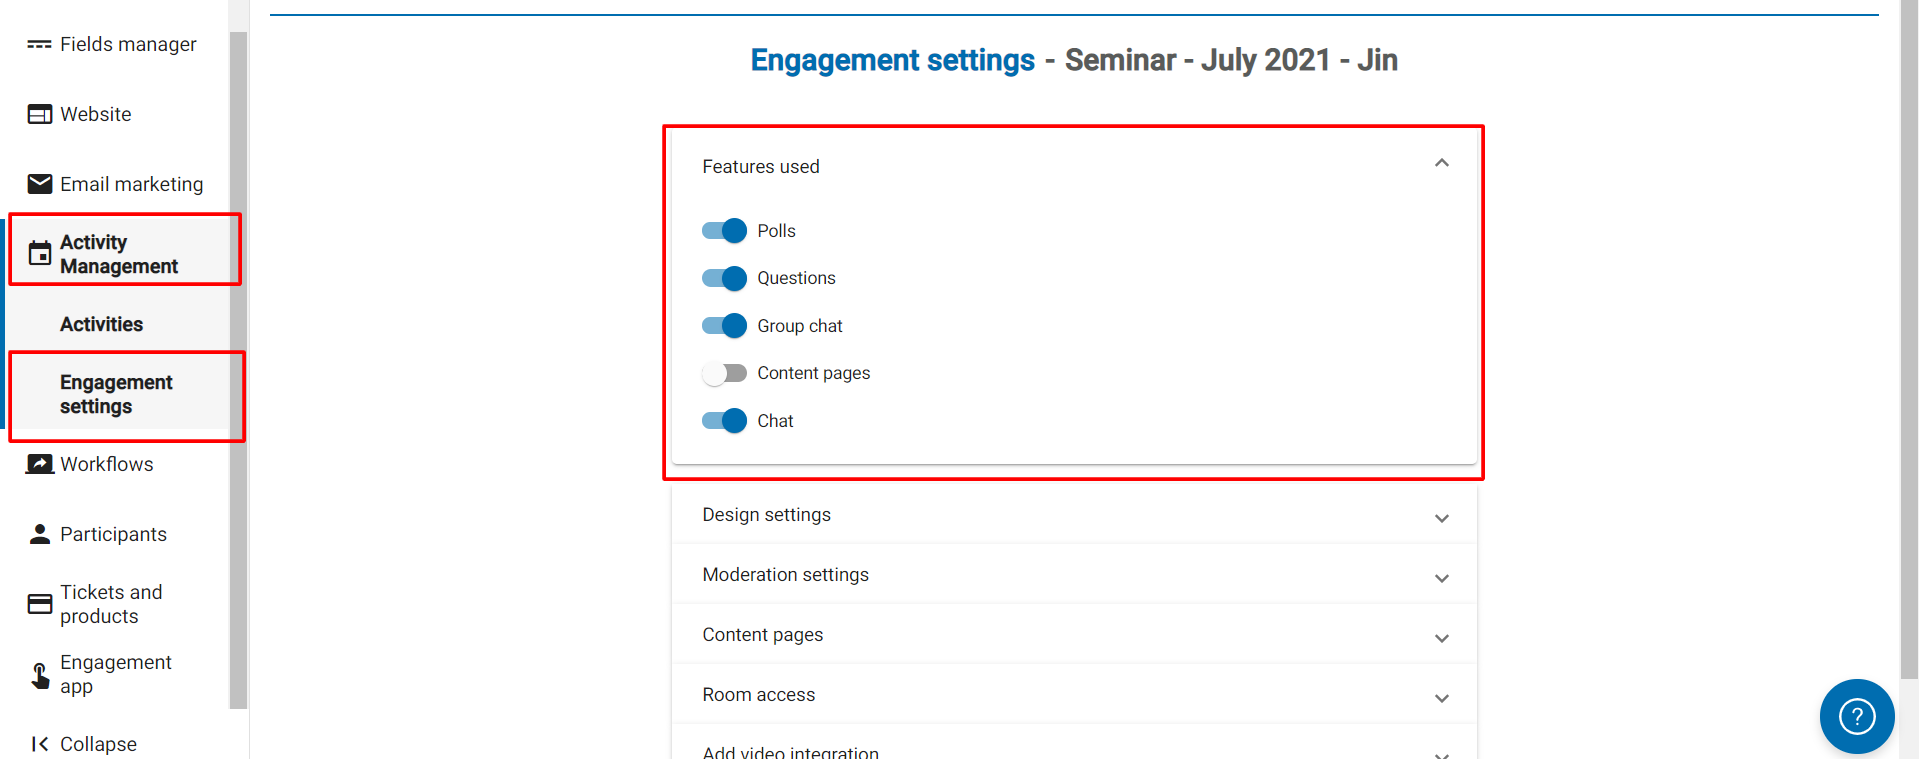 e_engagement_settings.png